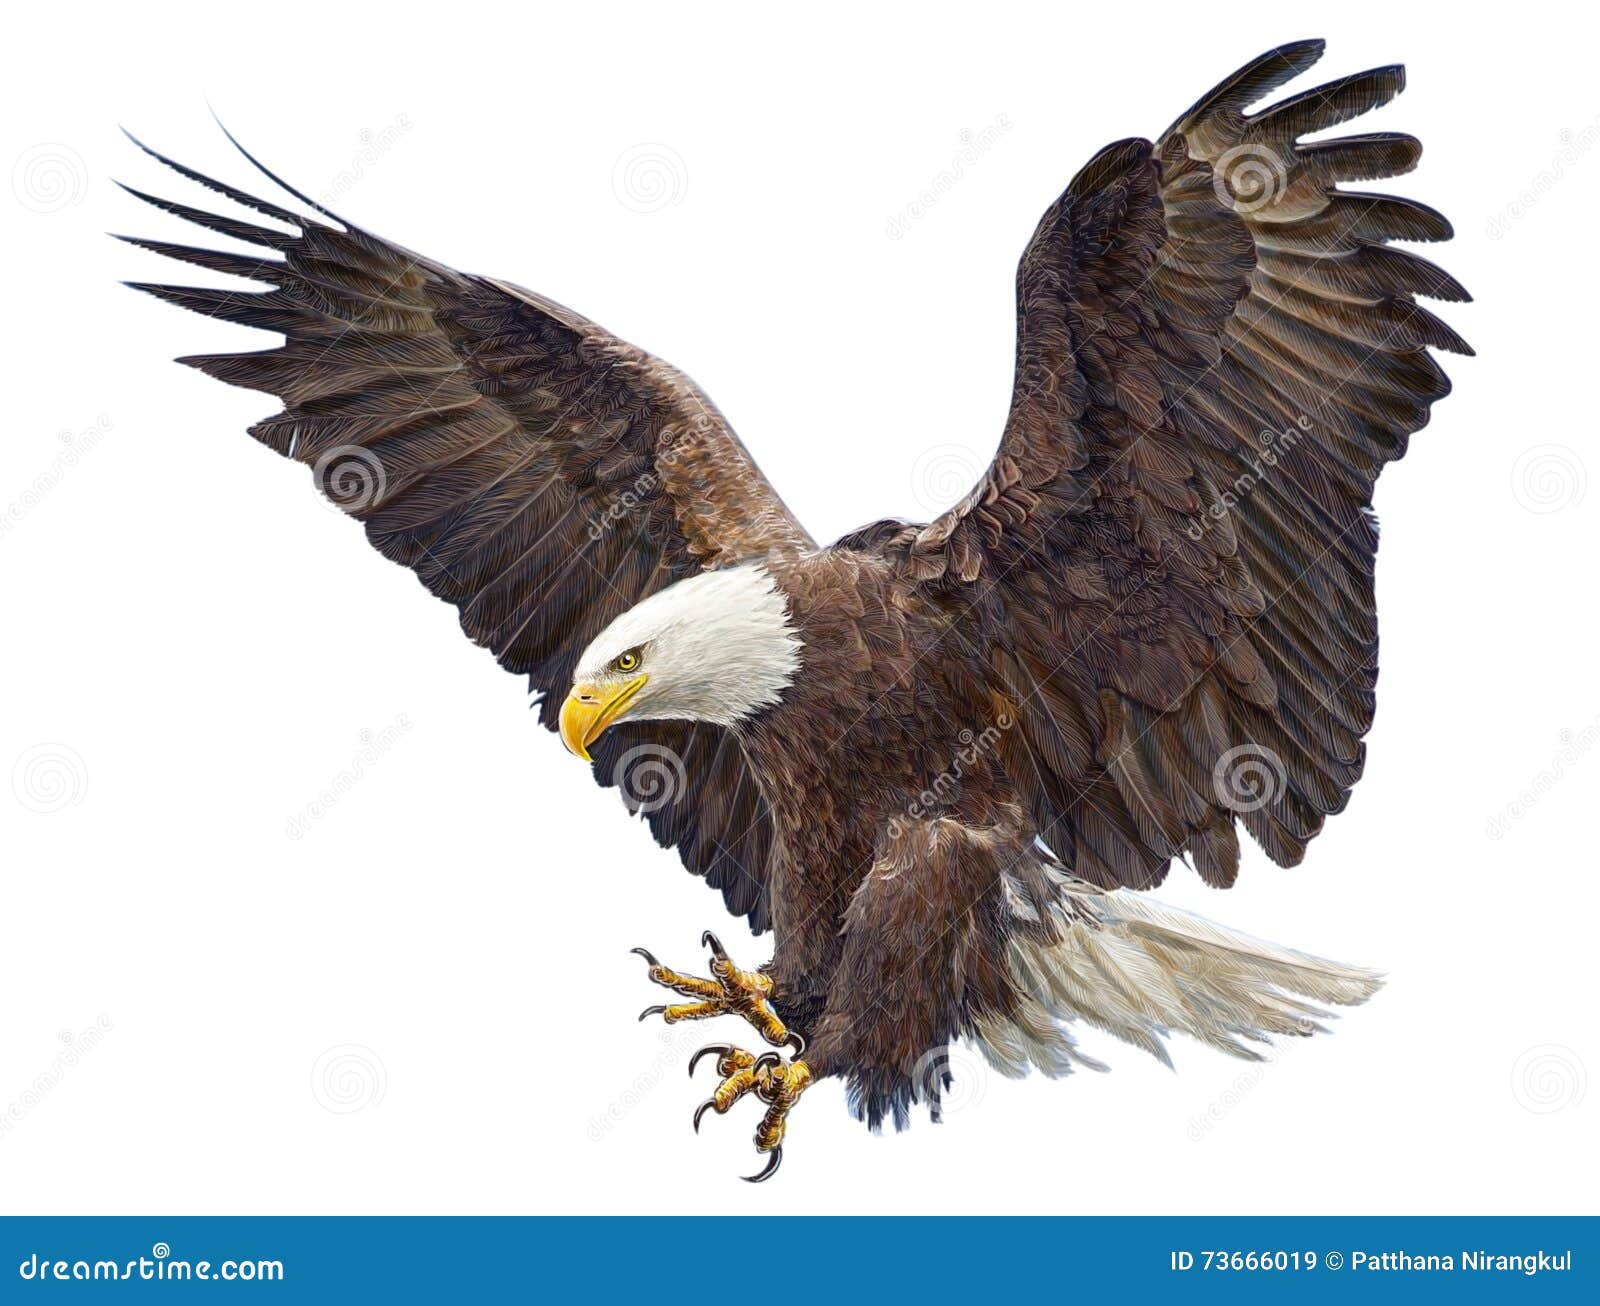 eagle landing clip art - photo #22